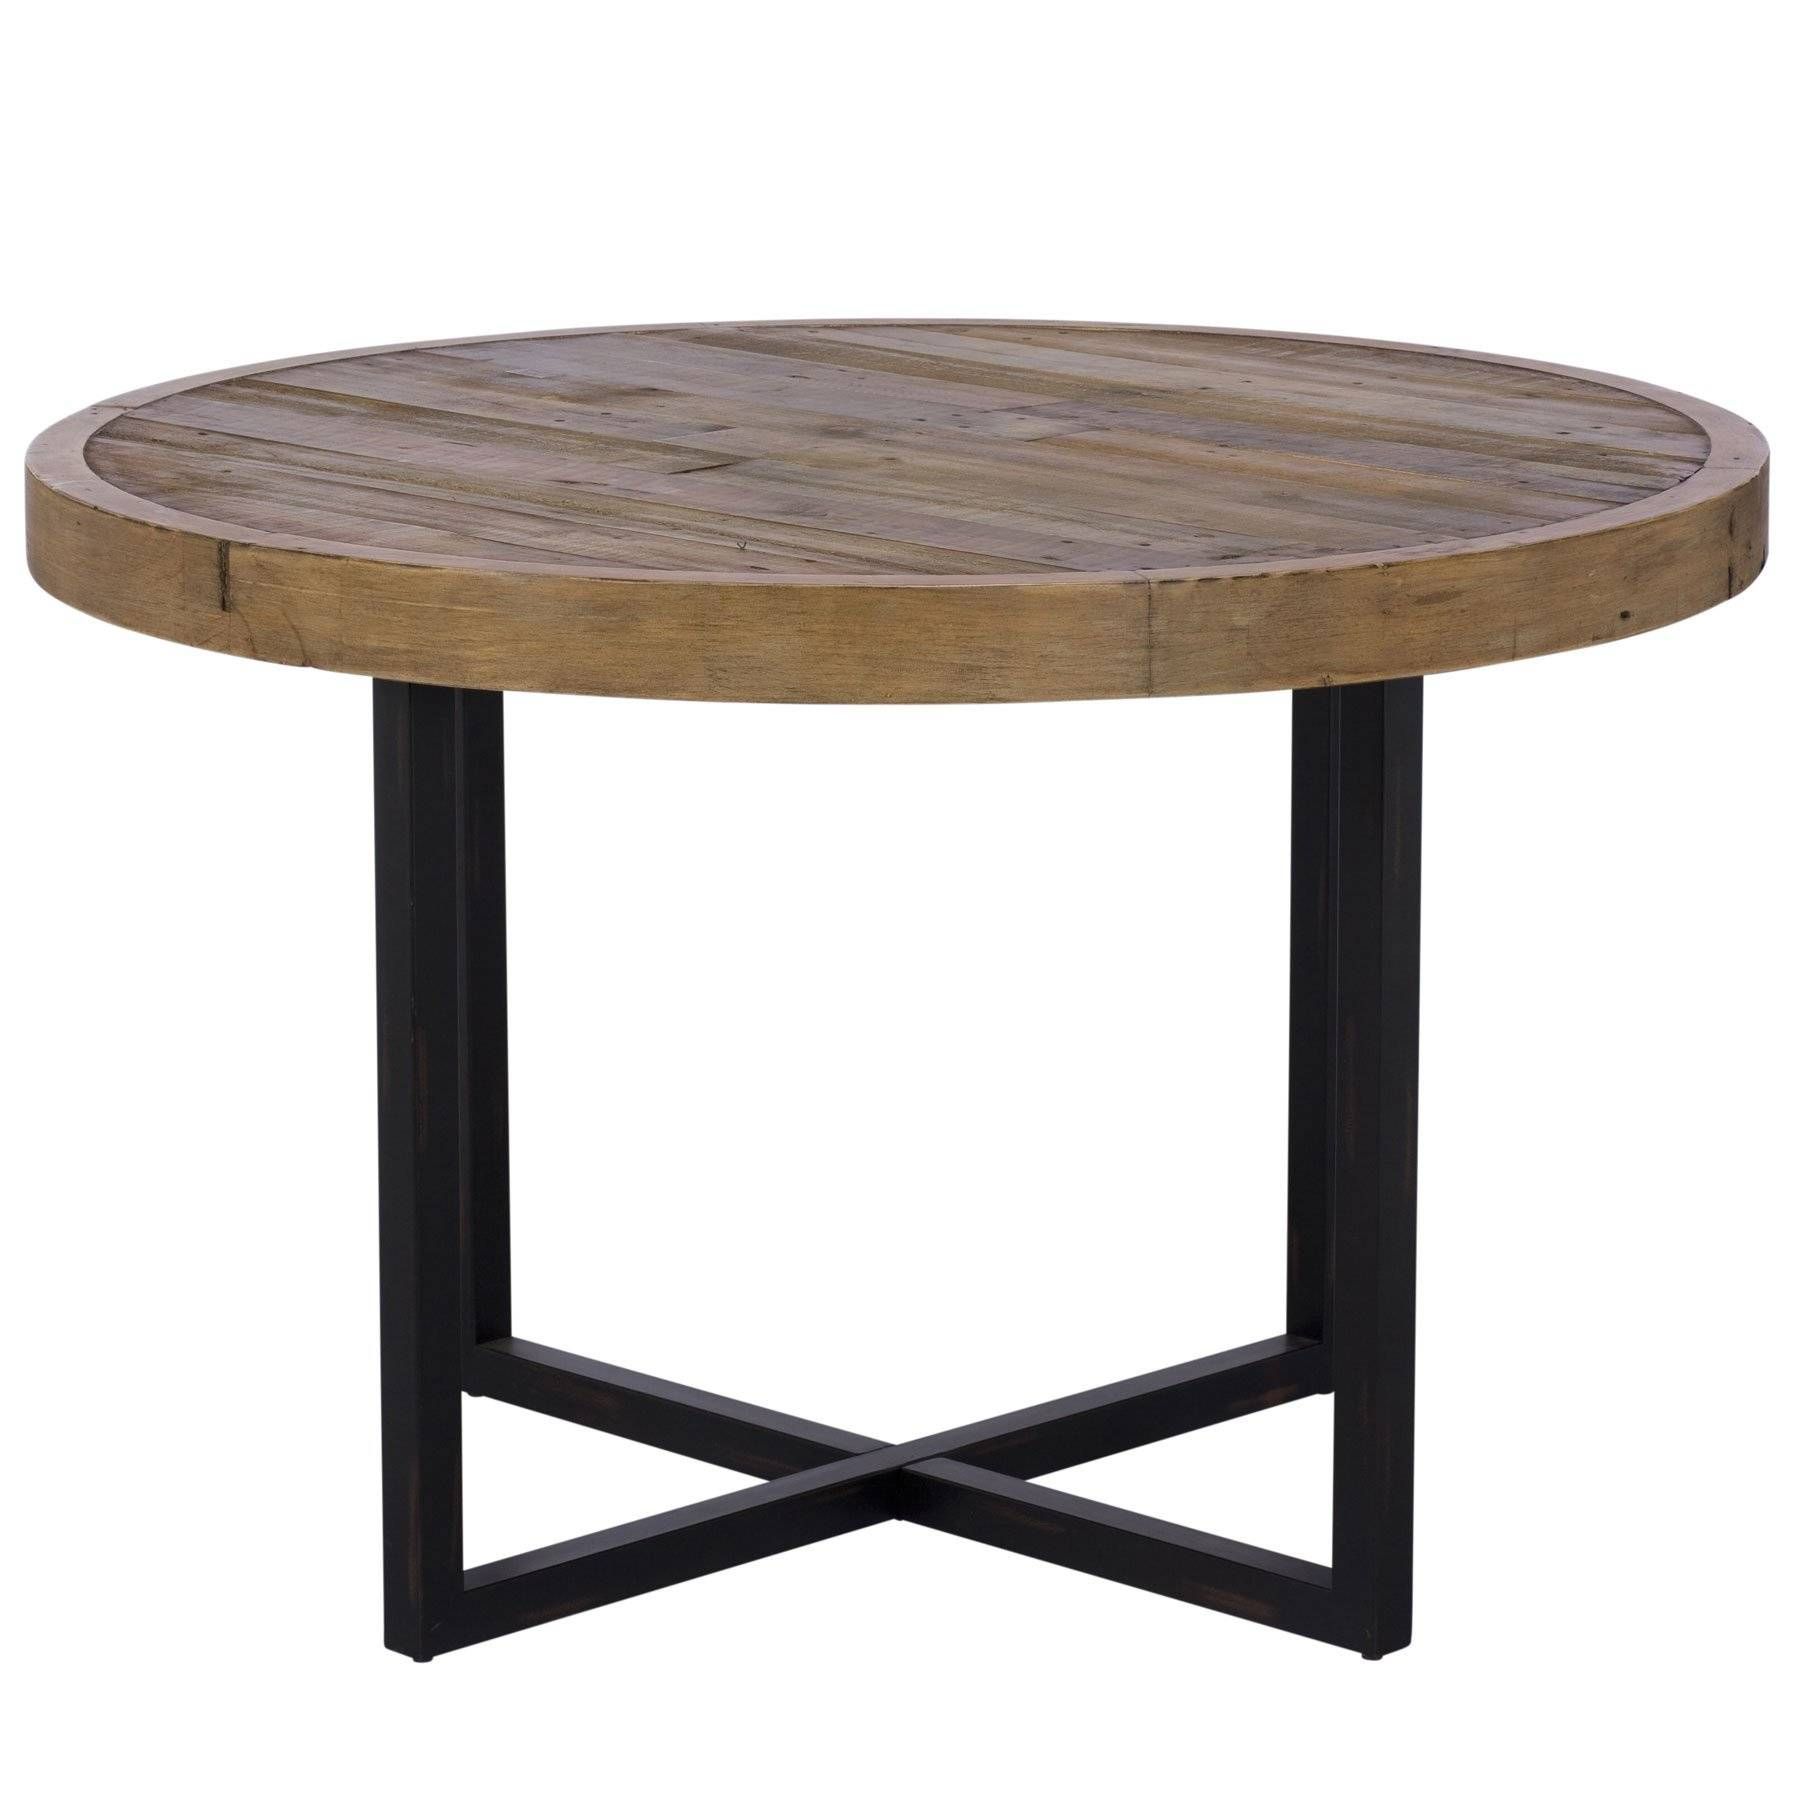 Enchanting Rustic Reclaimed Wood Extending Dining Table For 2018 Hart Reclaimed Extending Dining Tables (View 8 of 25)